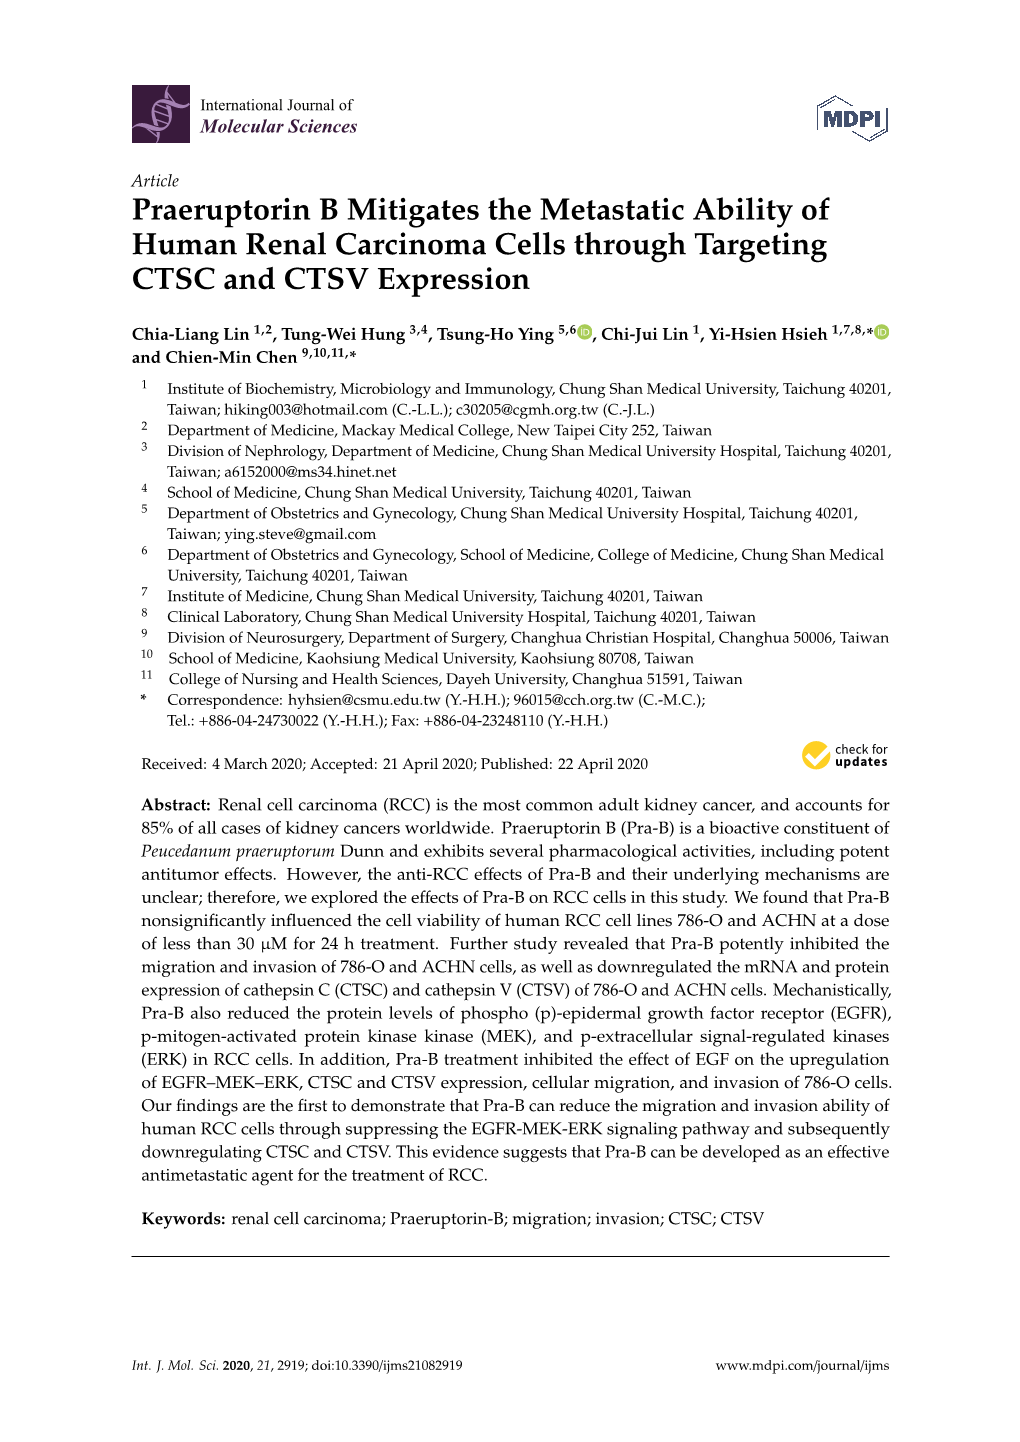 Praeruptorin B Mitigates the Metastatic Ability of Human Renal Carcinoma Cells Through Targeting CTSC and CTSV Expression